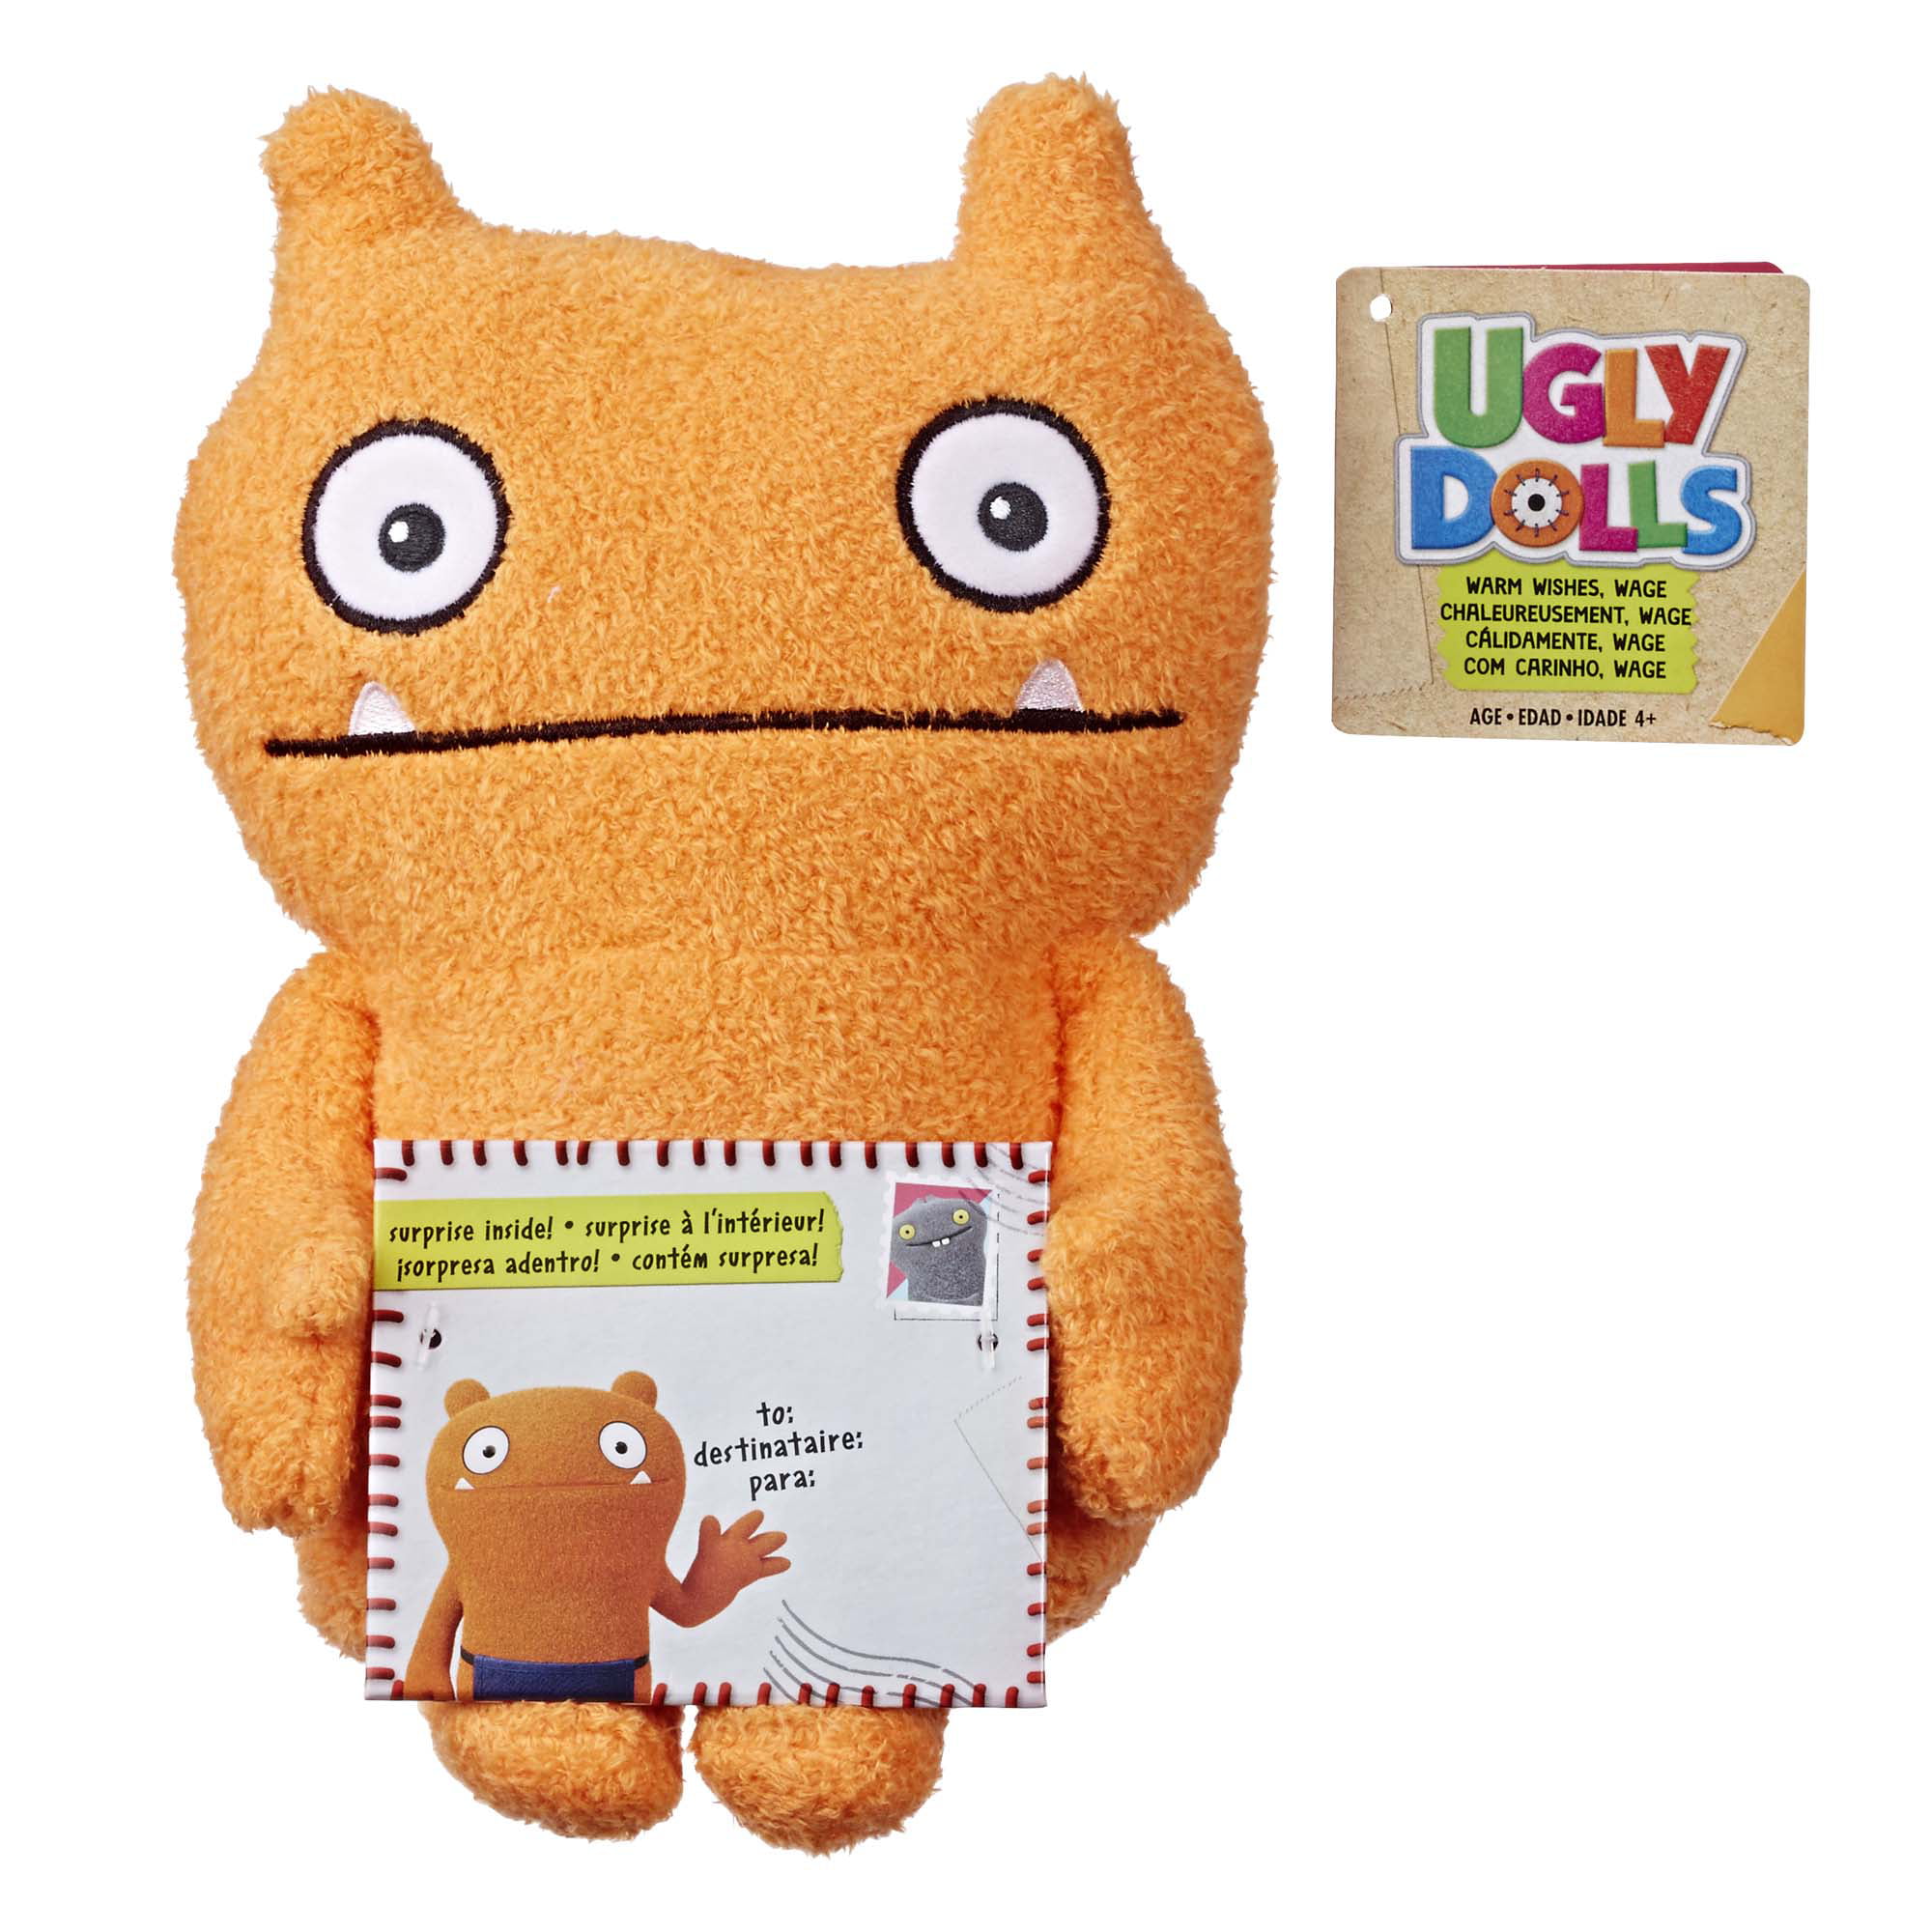 UglyDolls WARM WISHES Green Ox Stuffed Plush Toy 10" Tall 